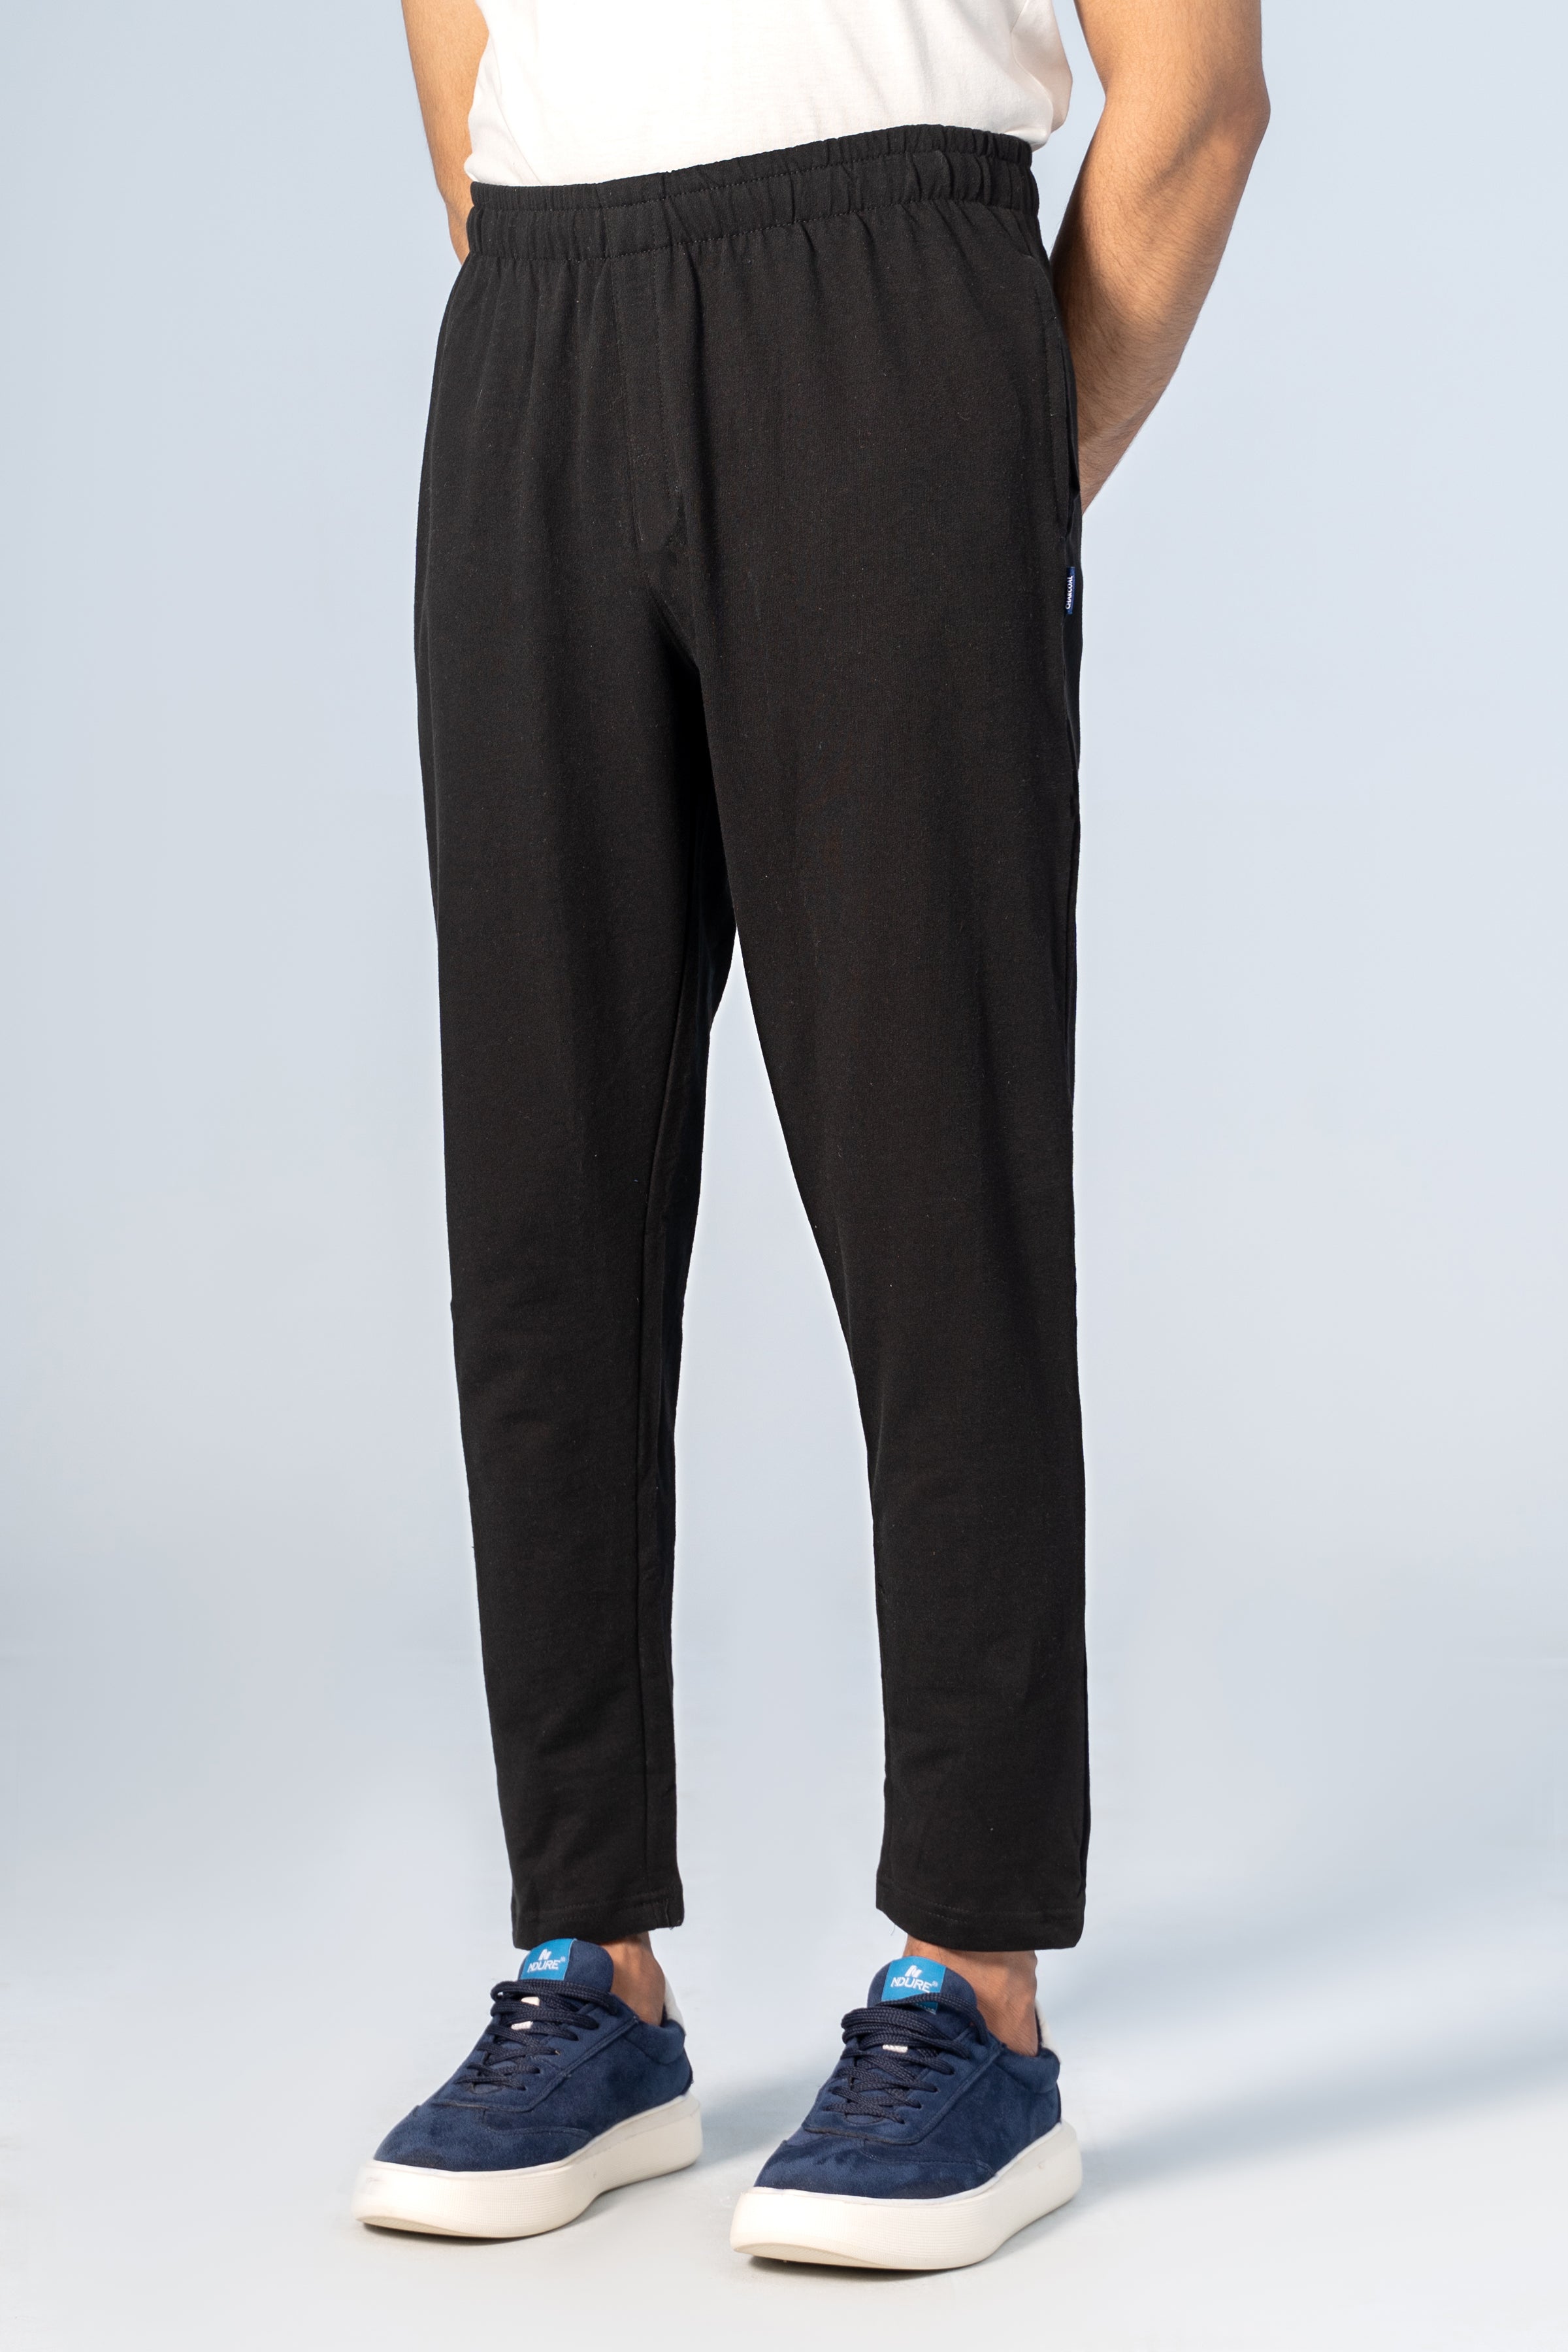 ULTIMATE COMFORT SLEEPWEAR PANT BLACK - Charcoal Clothing